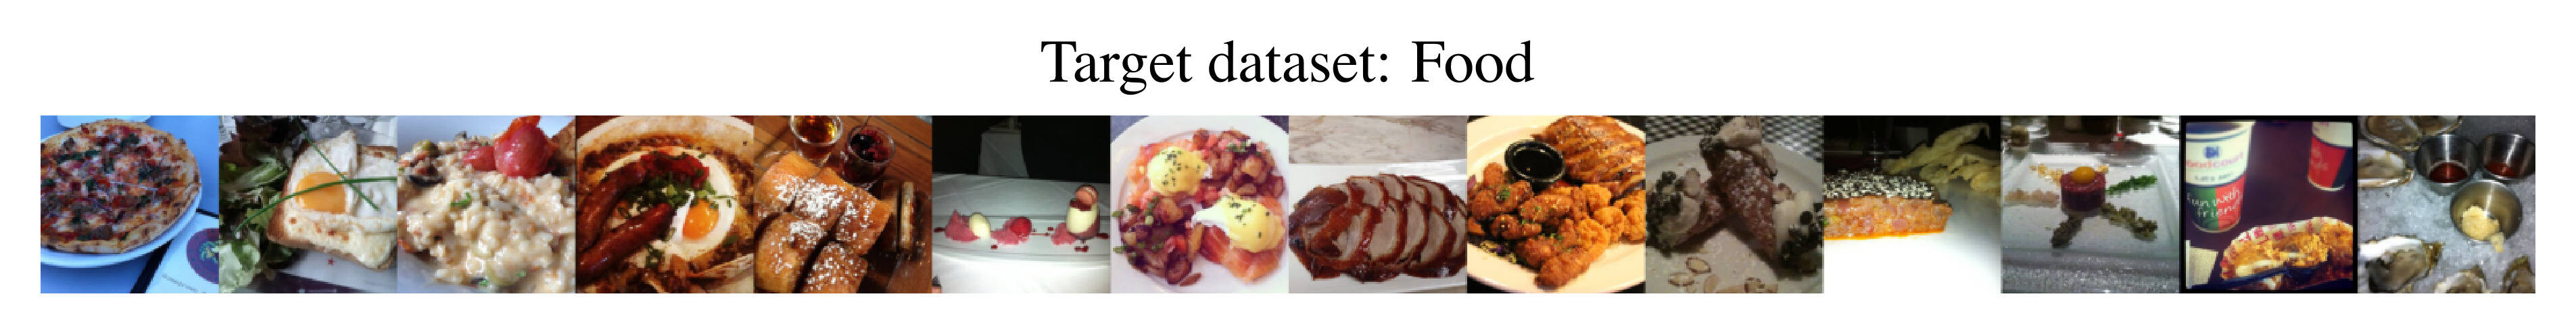 Food target dataset.